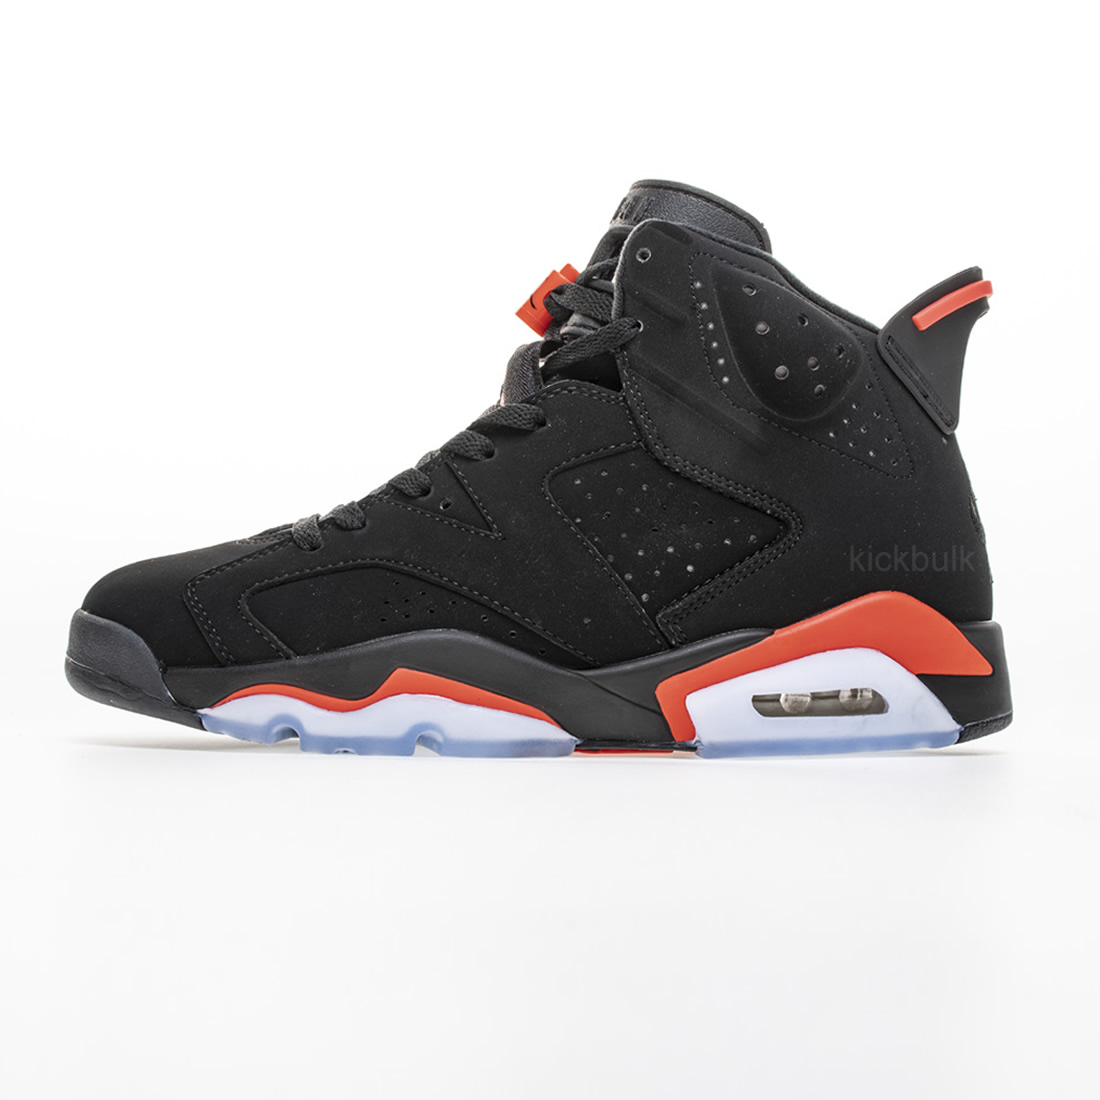 Nike Air Jordan 6 Black Infrared 384664 060 1 - www.kickbulk.co